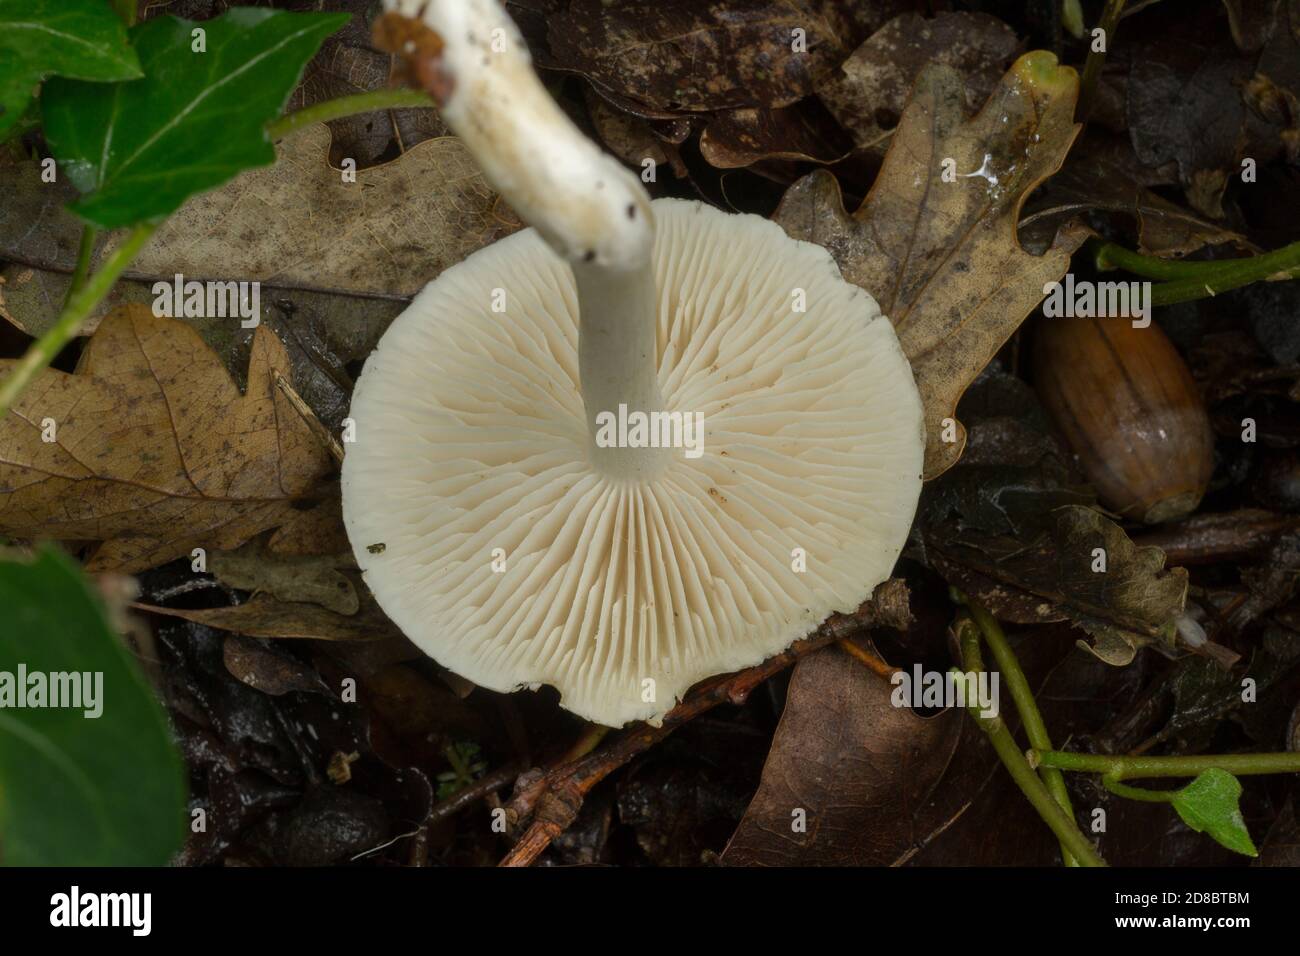 The gills of the sweetbread mushroom or clitopilus prunulus. Stock Photo